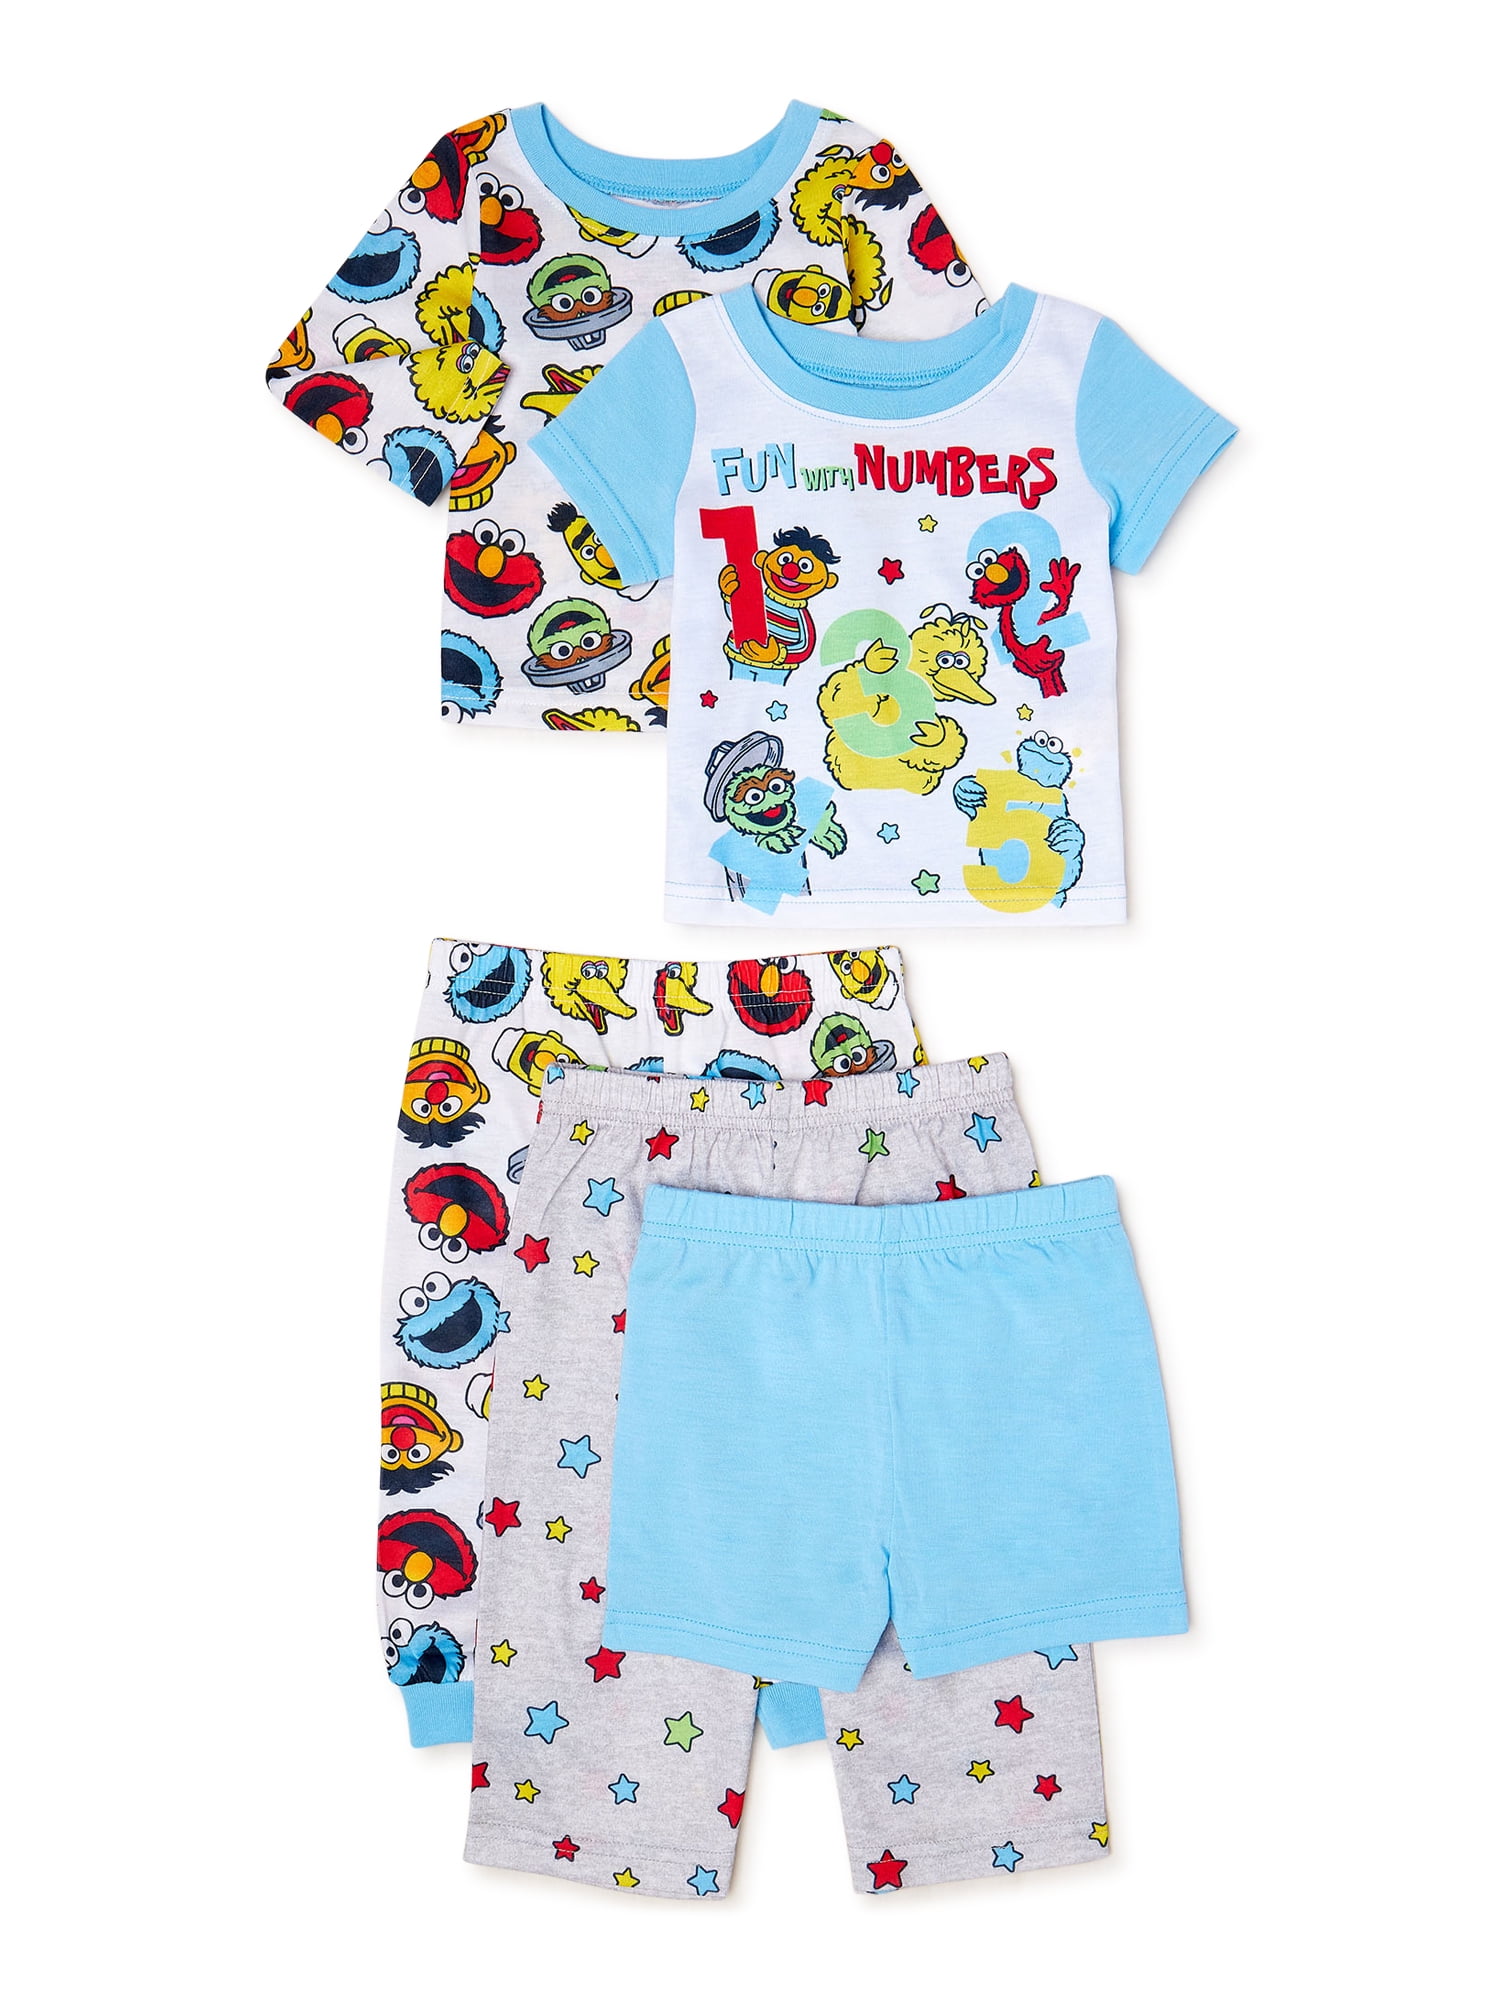 Childrens Toddlers Character Short PJs Pajama Set 